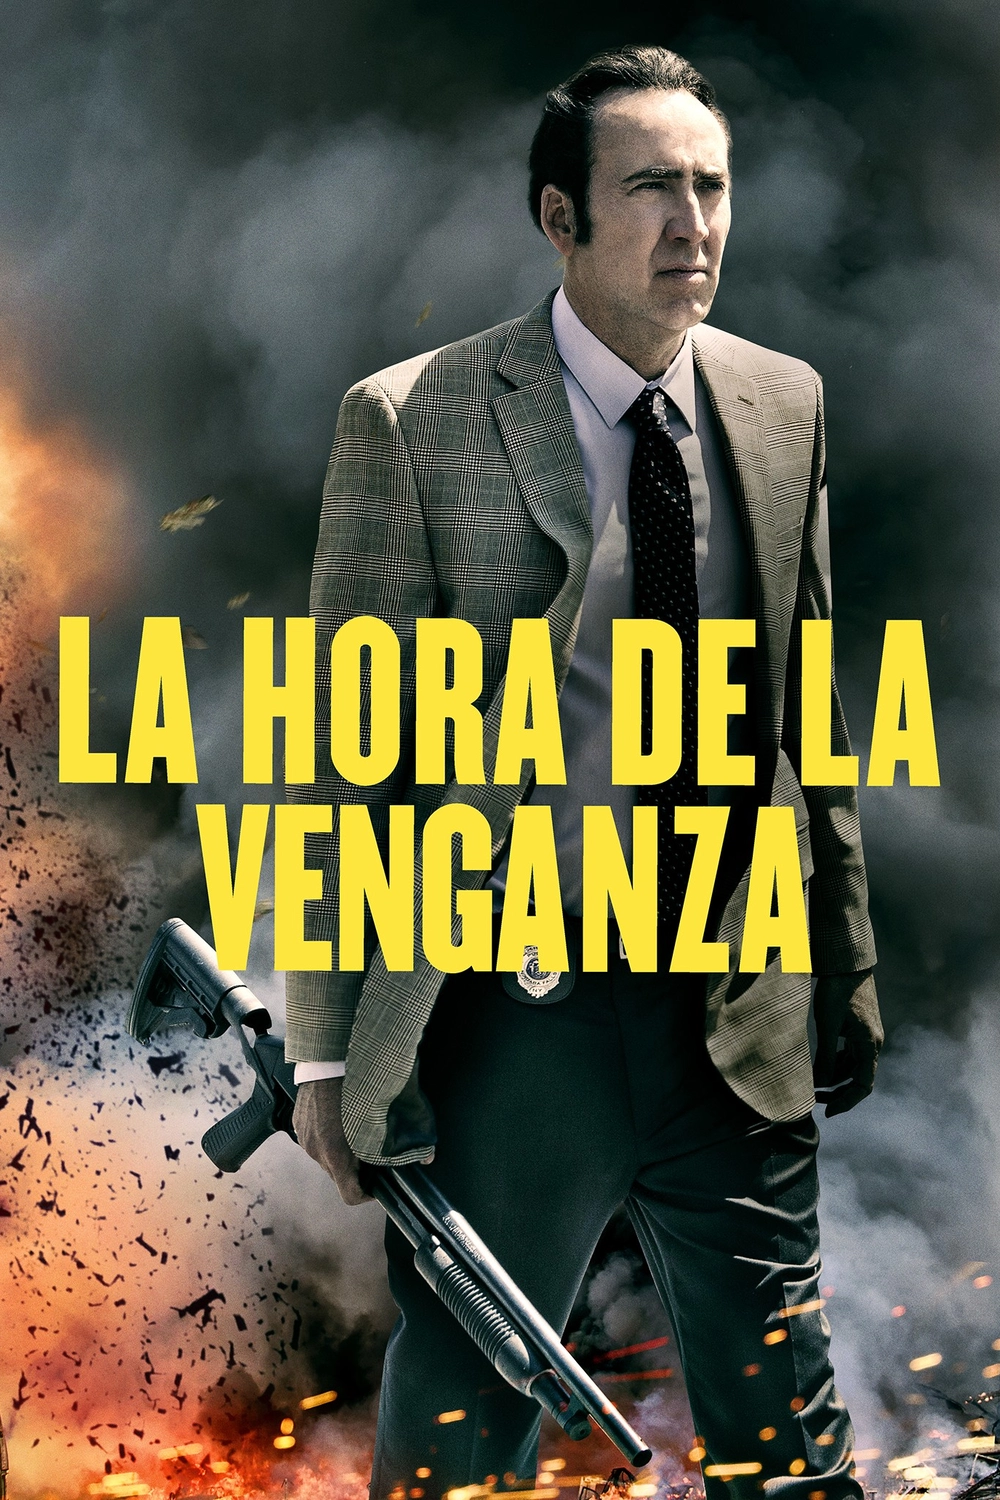 The Hit: La venganza - Filmin